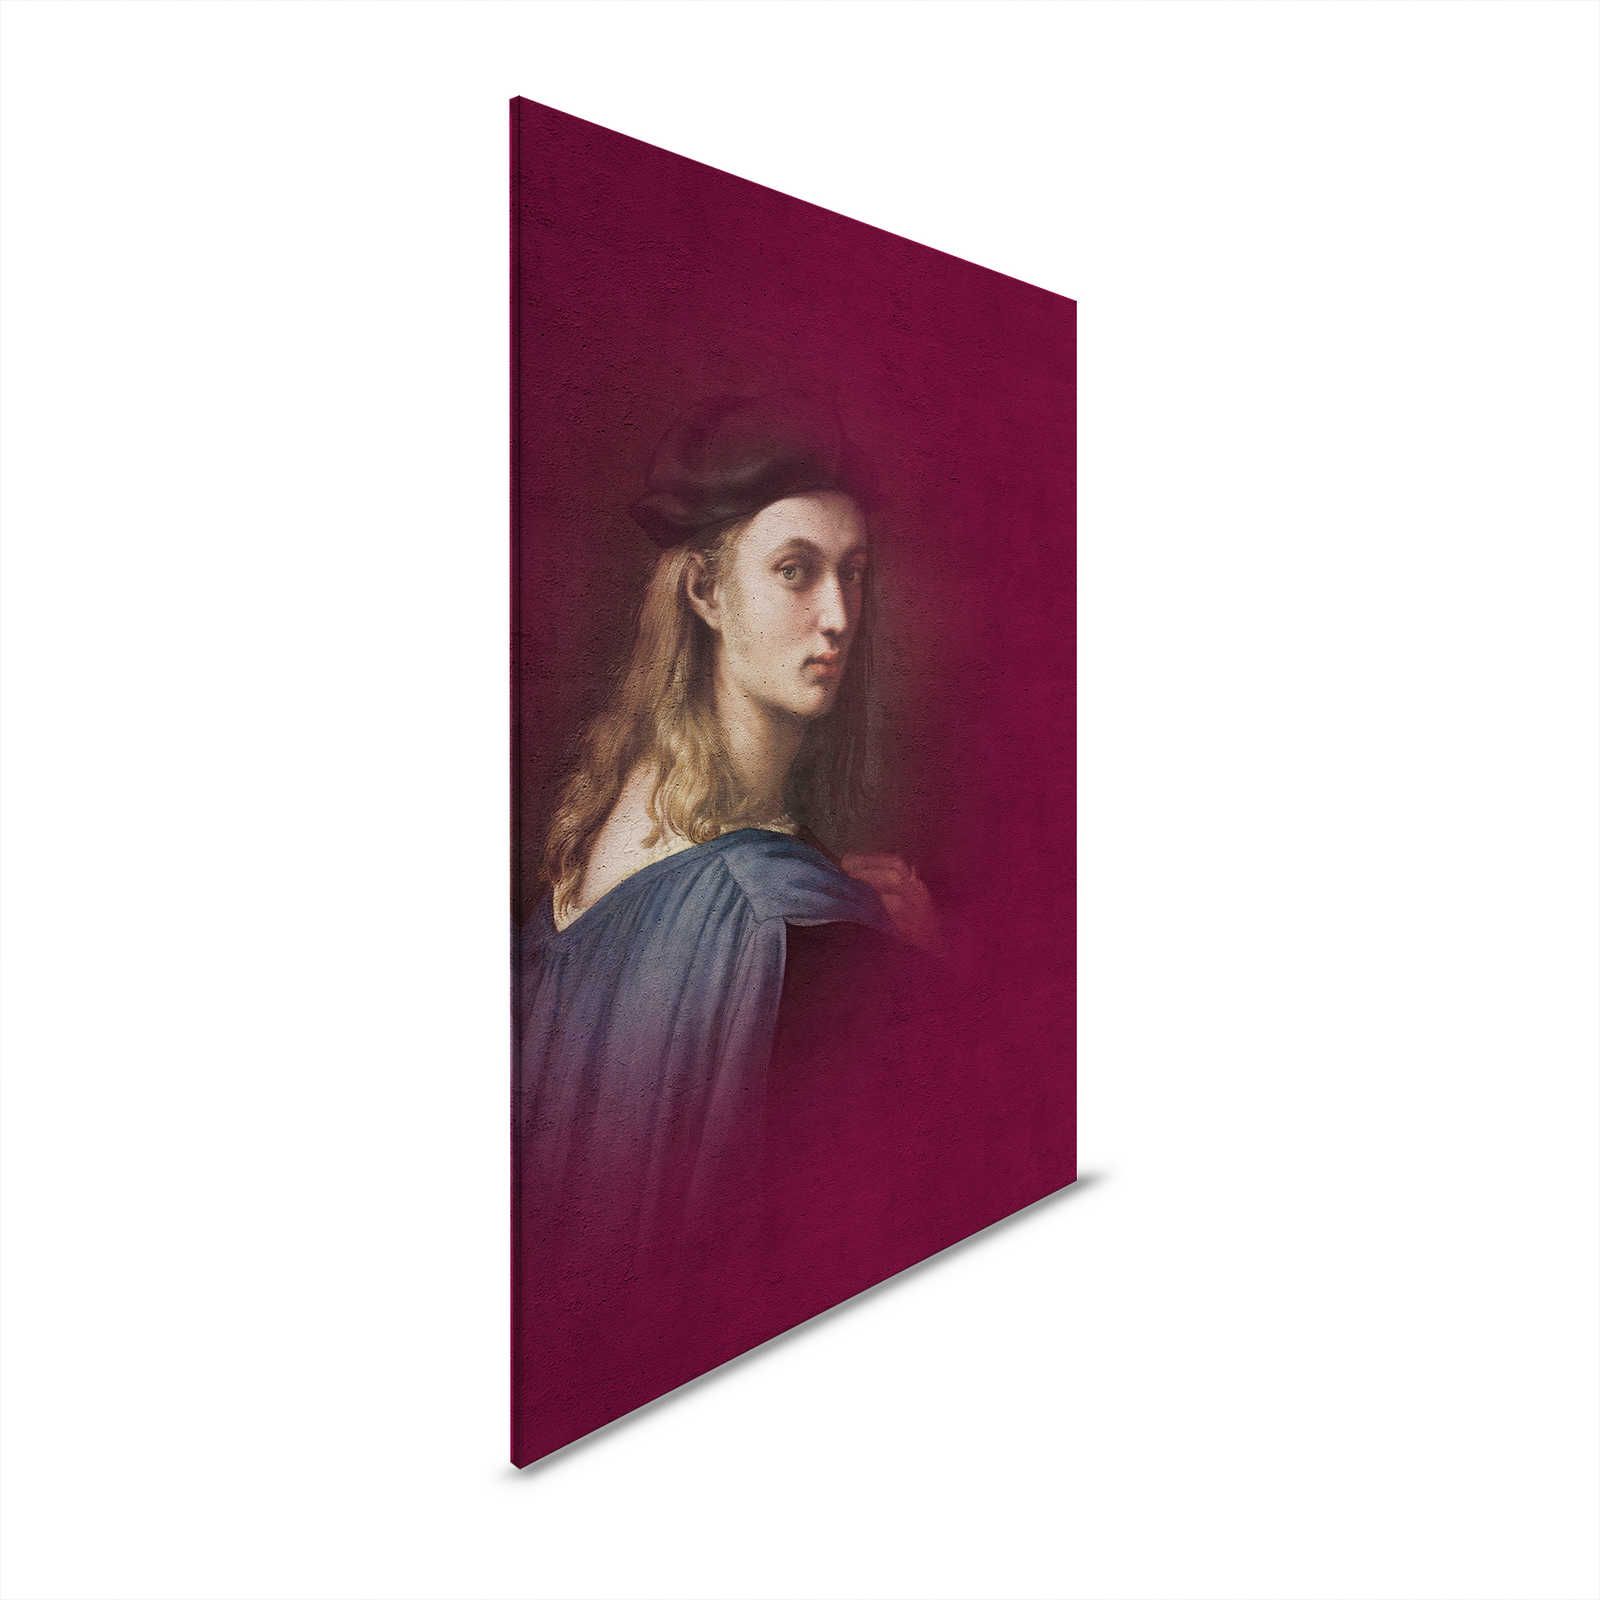 Lienzo retrato clásico joven - 0,80 m x 1,20 m
